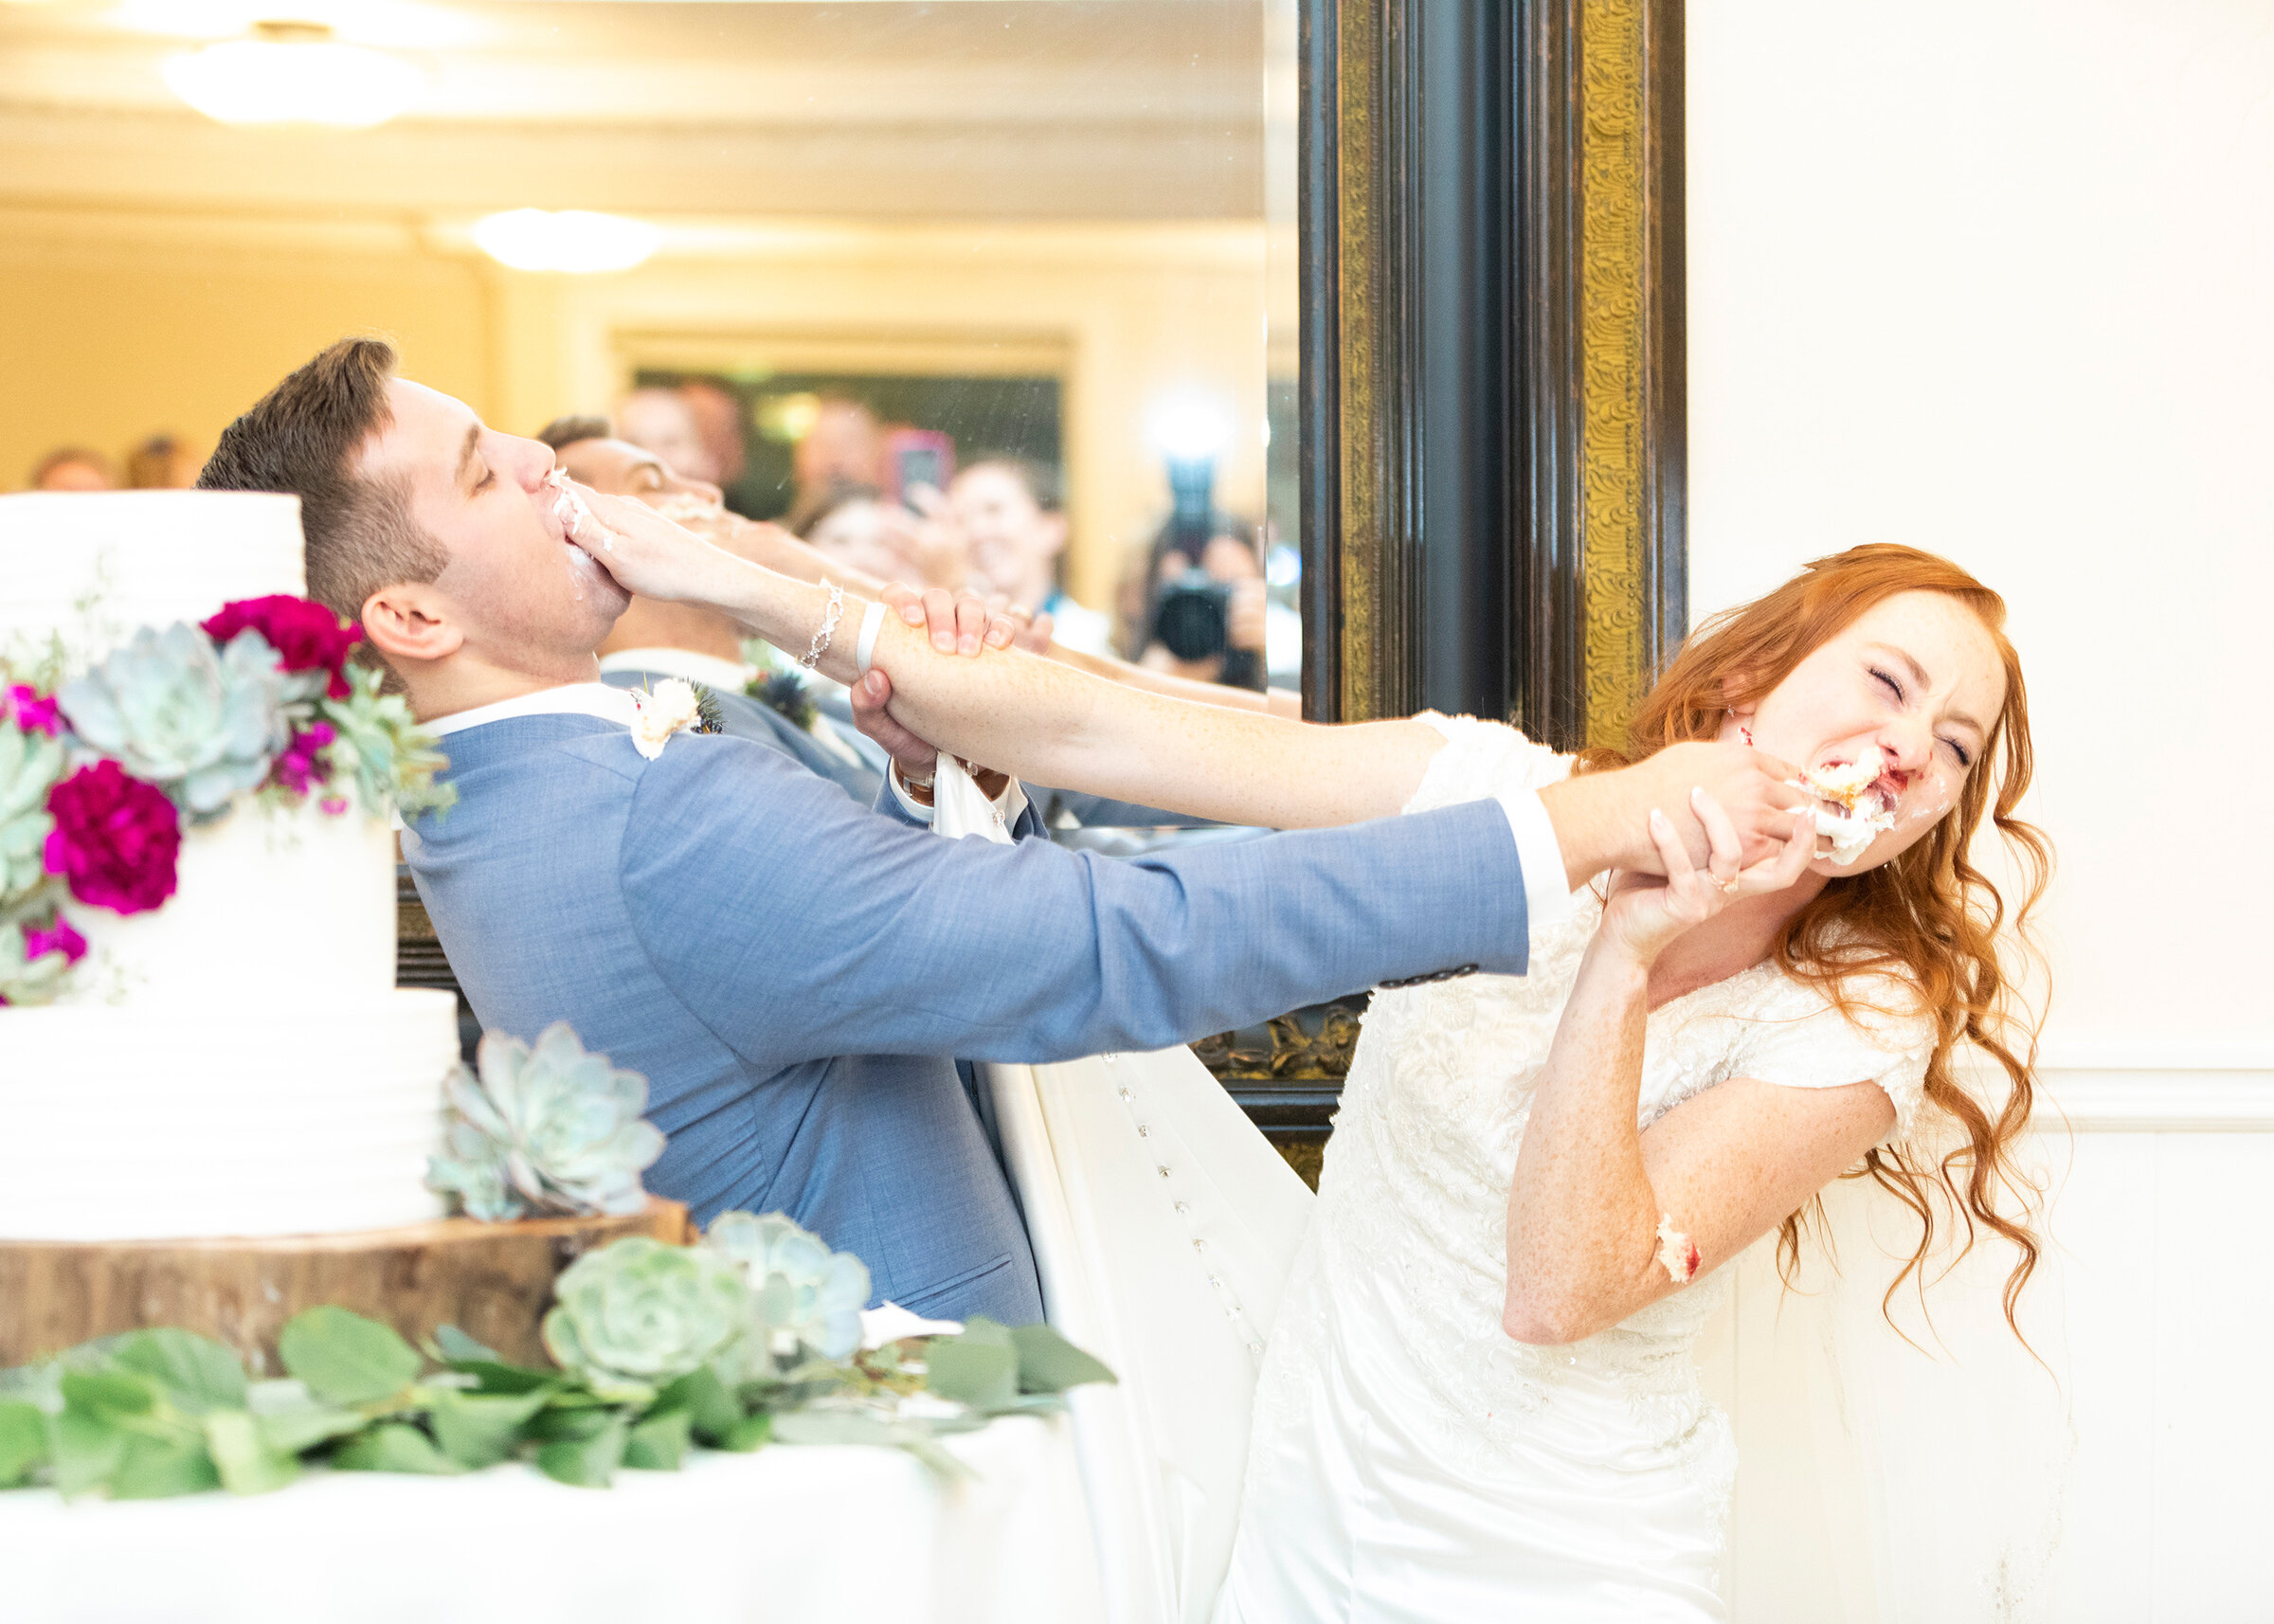 Wedding Photographers Failed Marriages - photograph